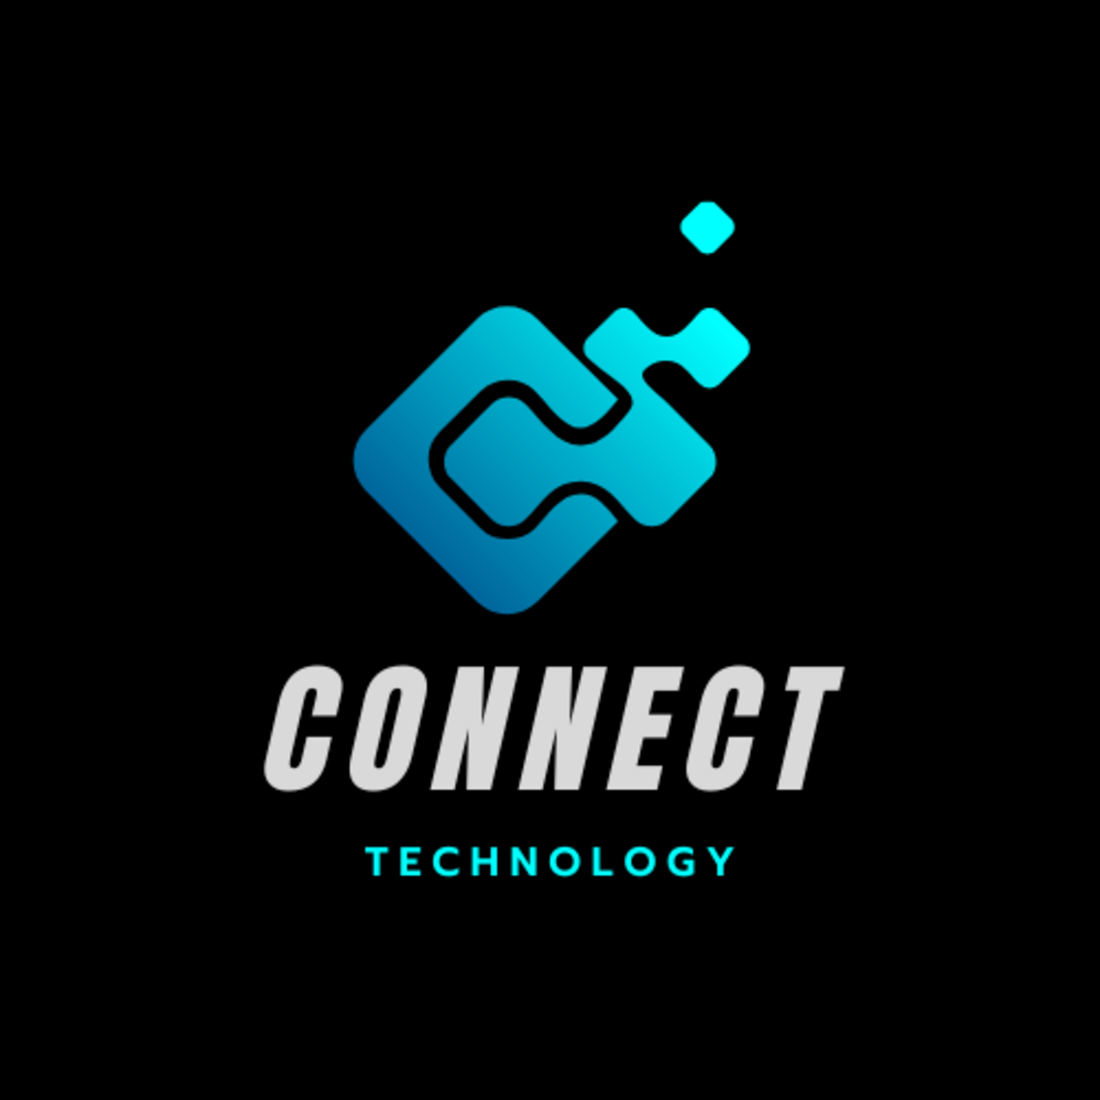 Tech logo preview image.